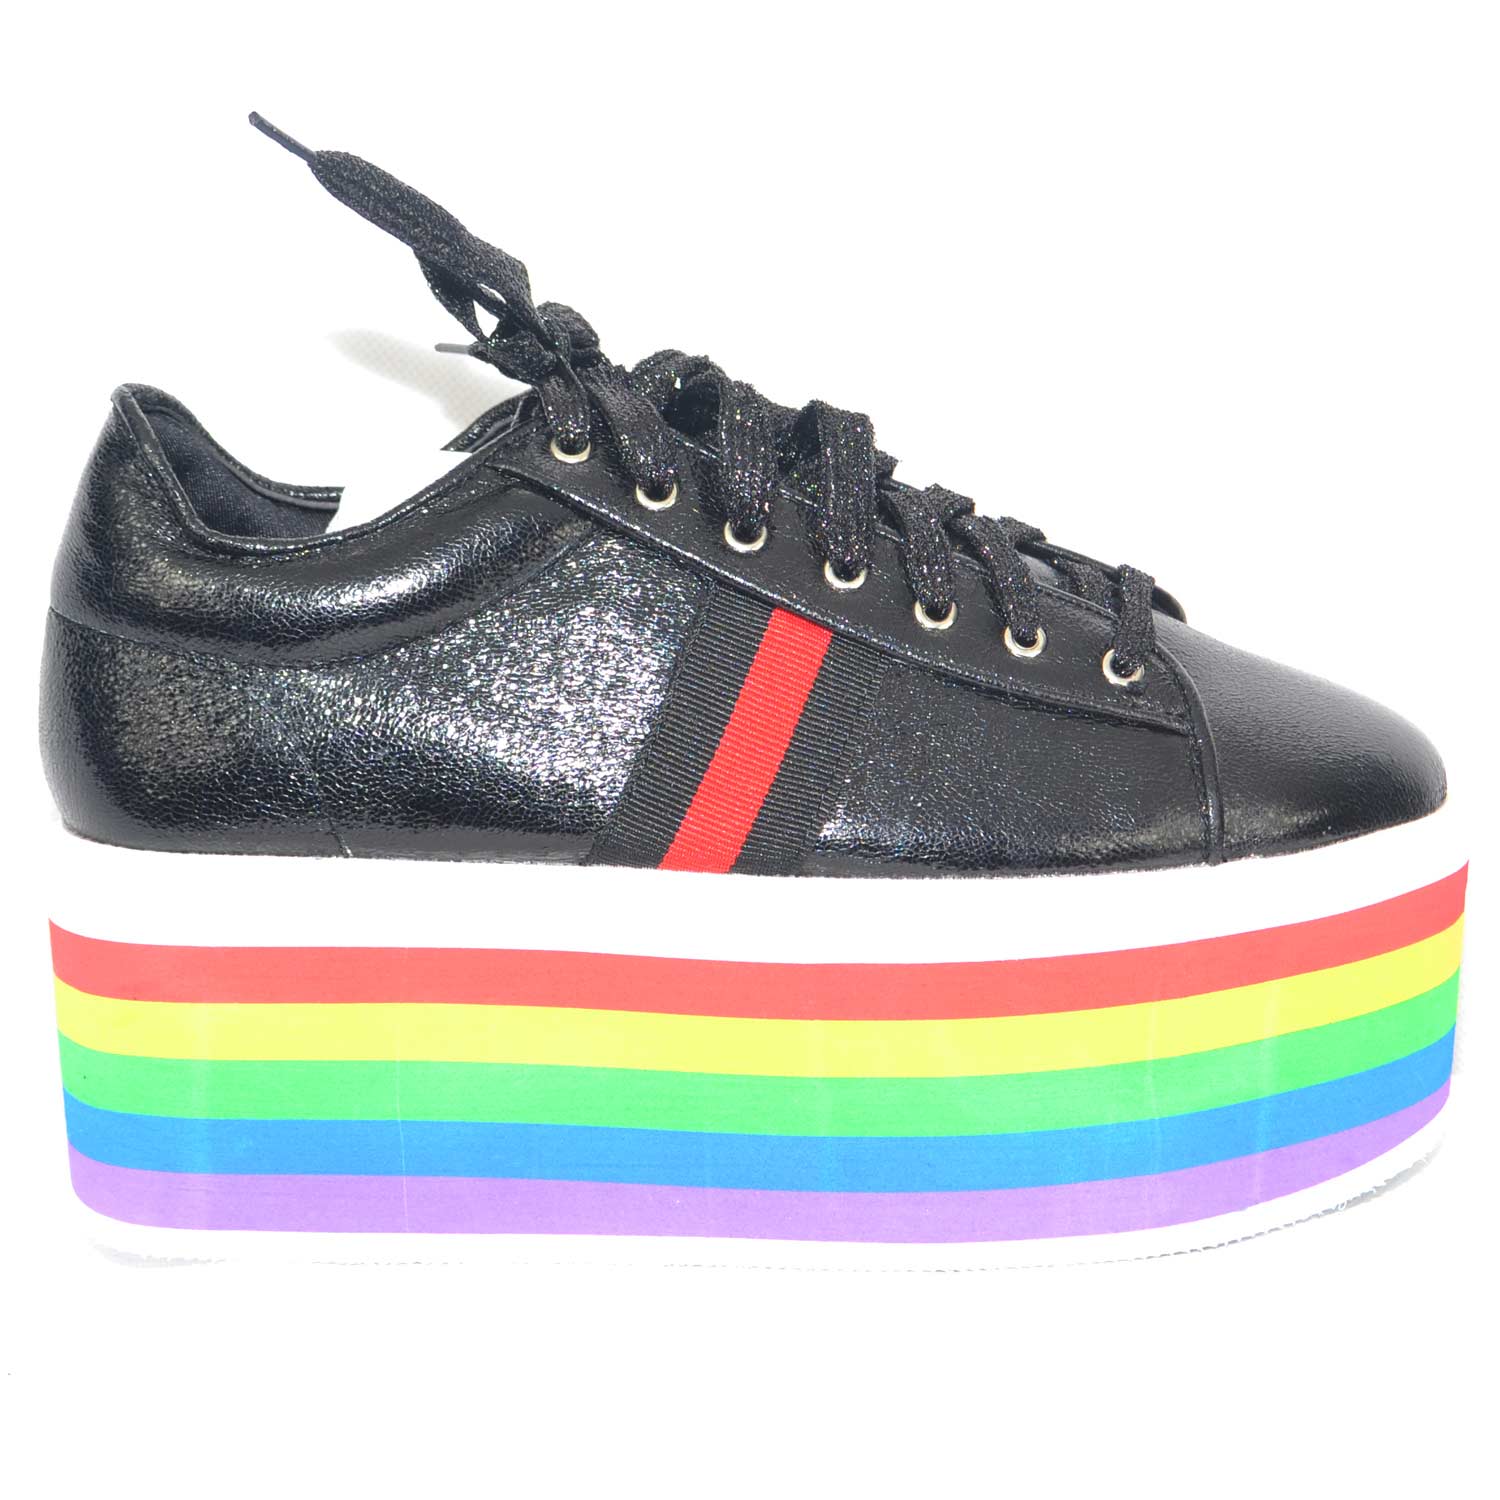 Sneaker platform perlato nero con para alta arcobaleno modello spice  glamour donna platform Sergio Todzi | MaluShoes